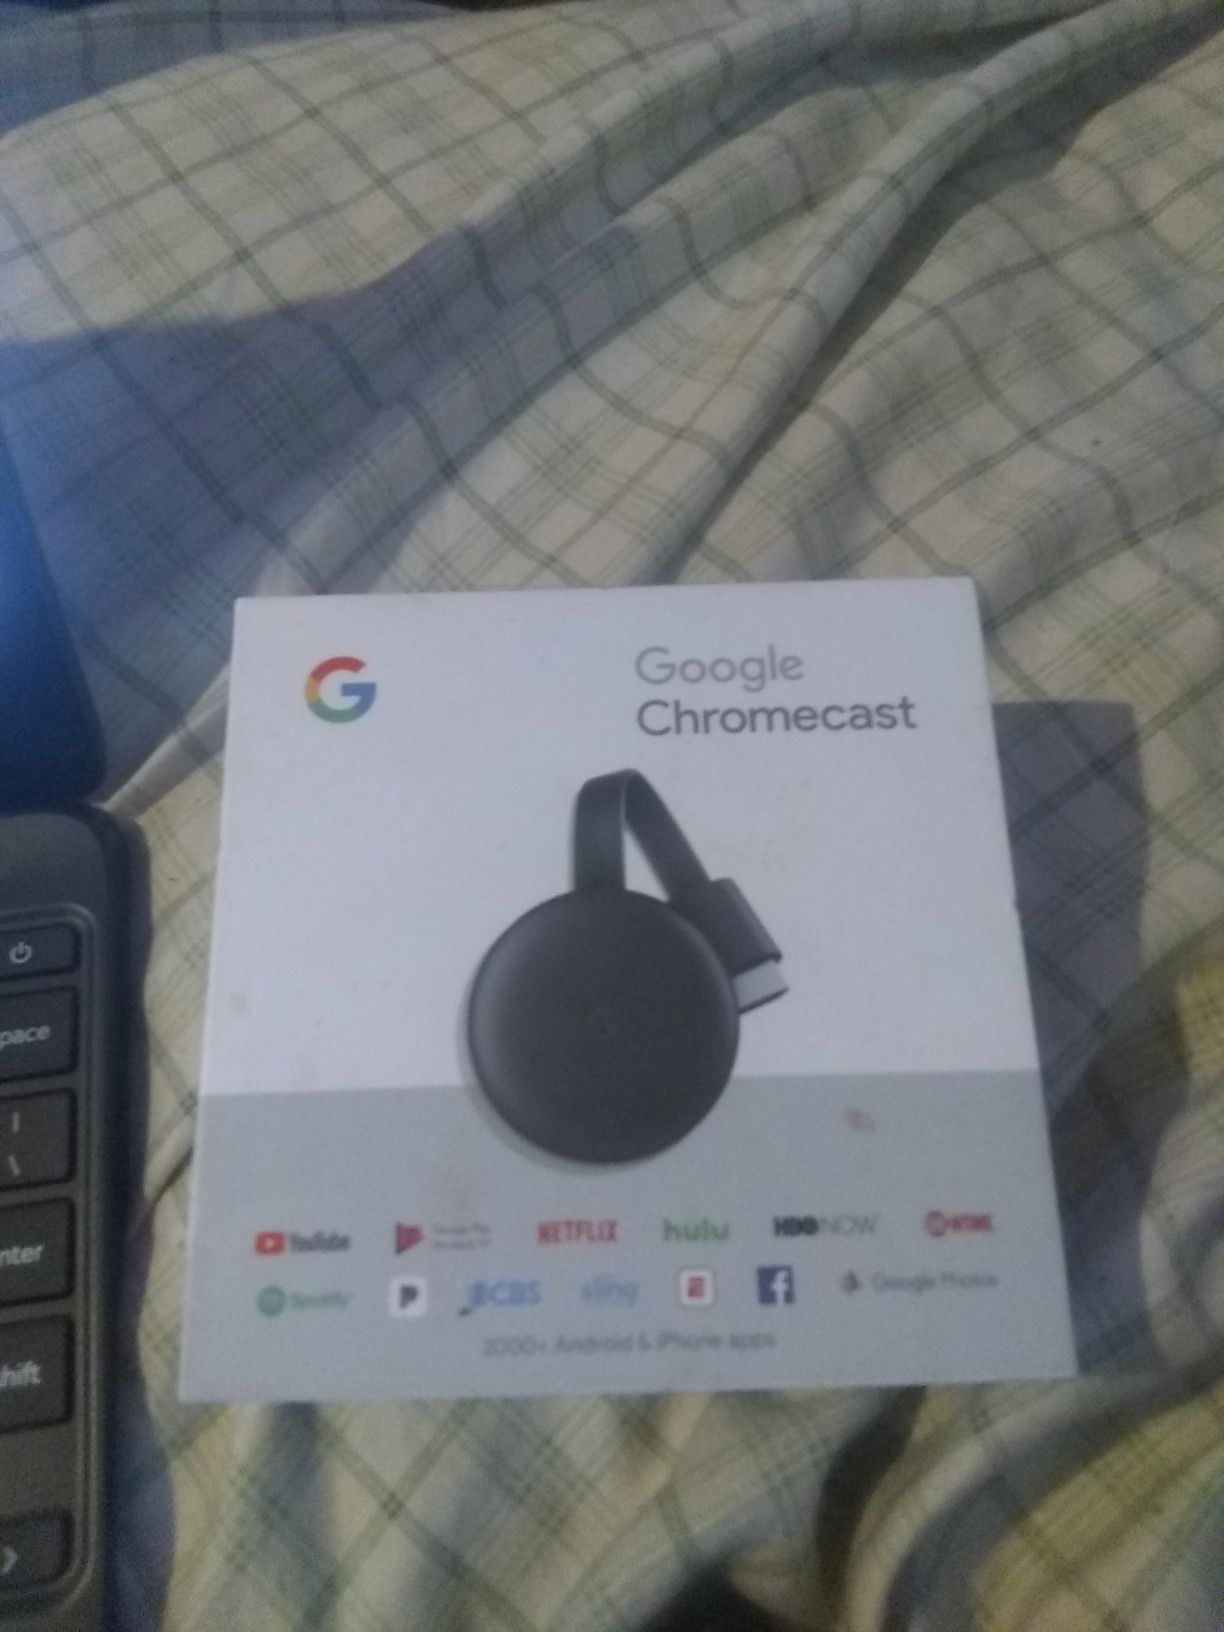 Google Chromecast smart device